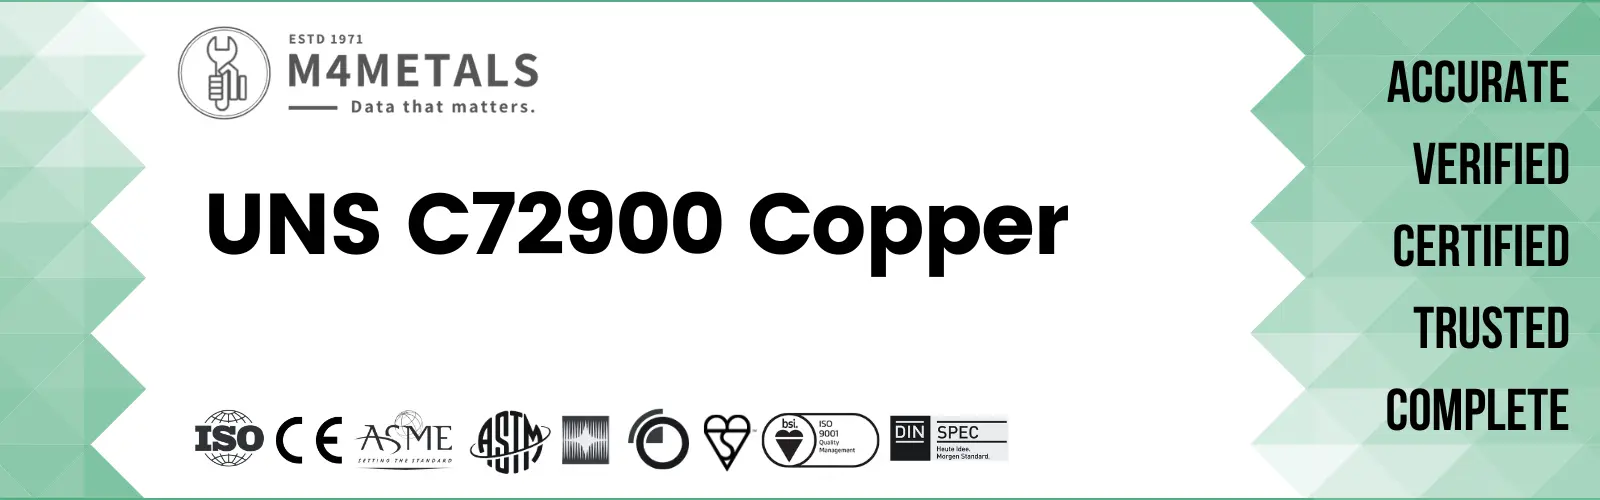 UNS C72900 Copper